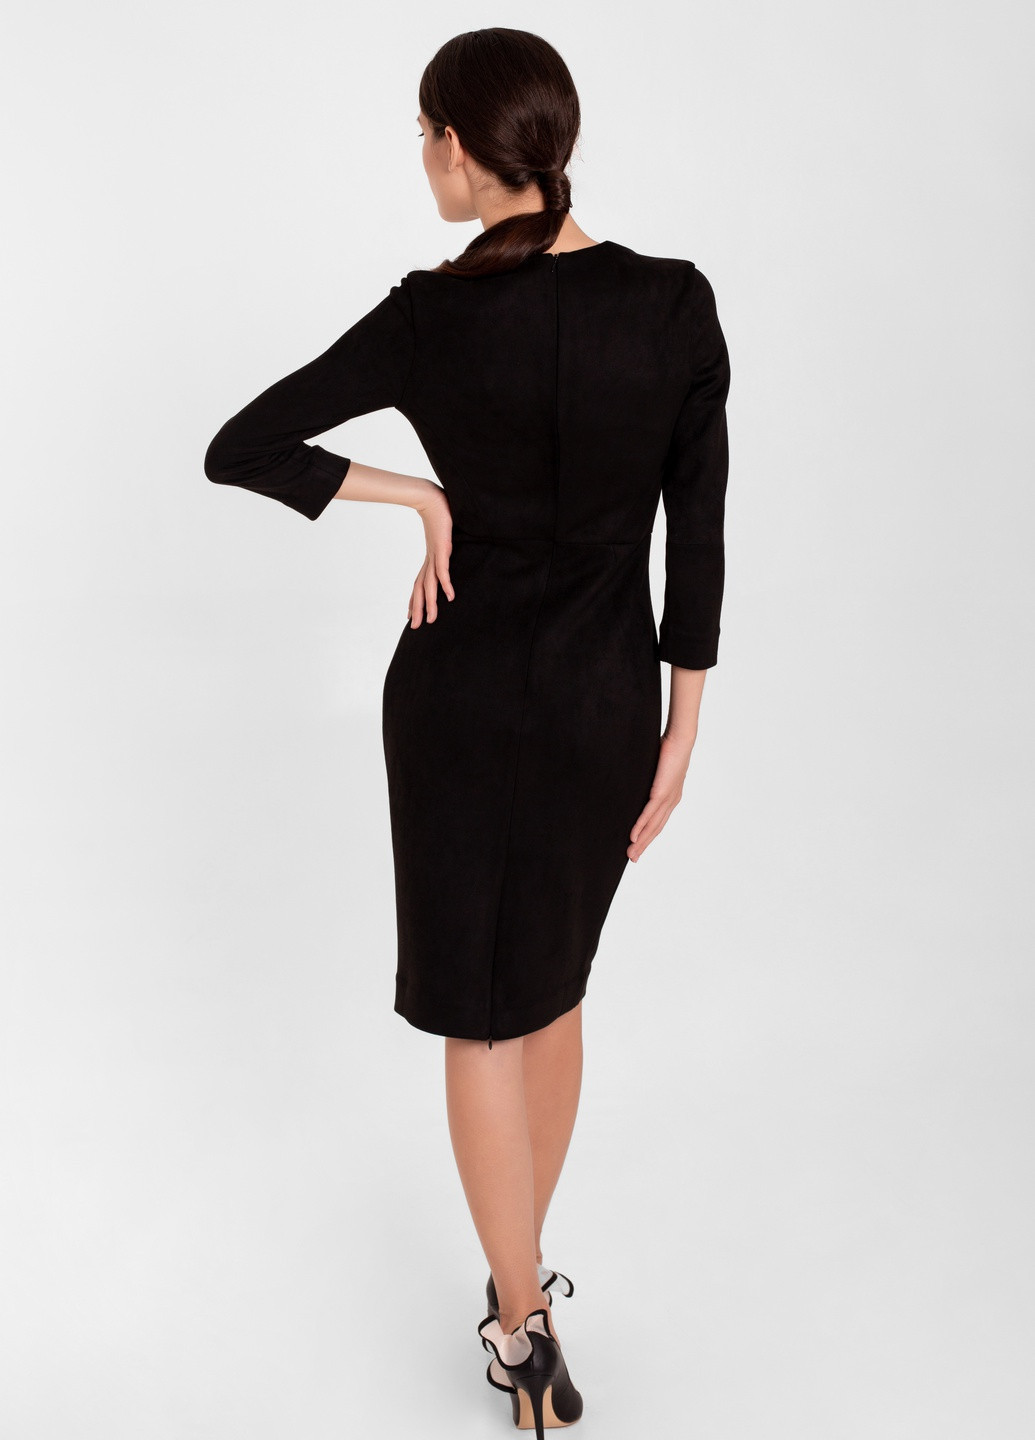 Черное деловое, коктейльное черное деловое платье из экозамши футляр Nai Lu-na by Anastasiia Ivanova однотонное